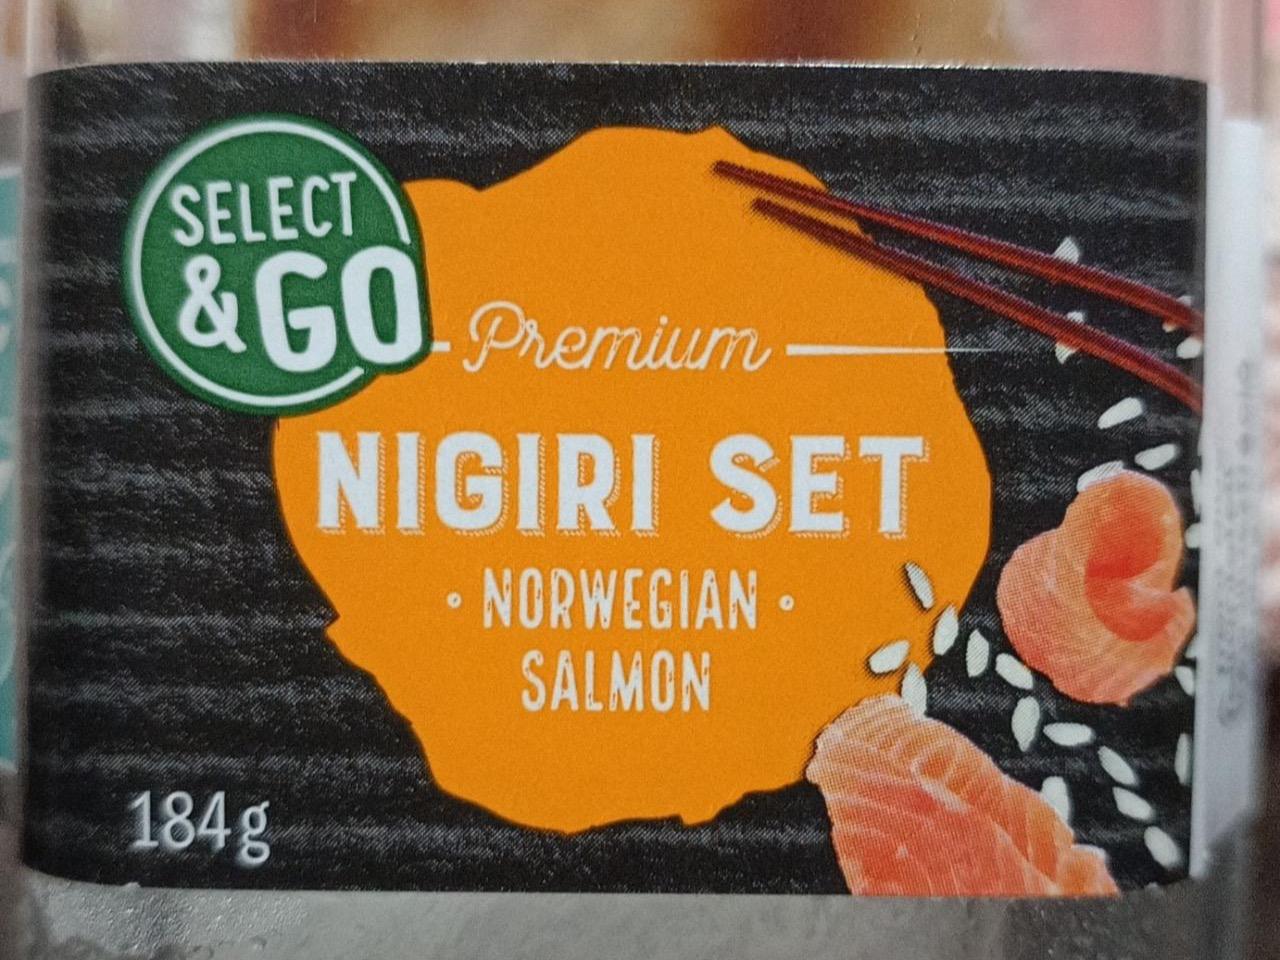 Képek - Nigiri set Norwegian salmon Select & Go